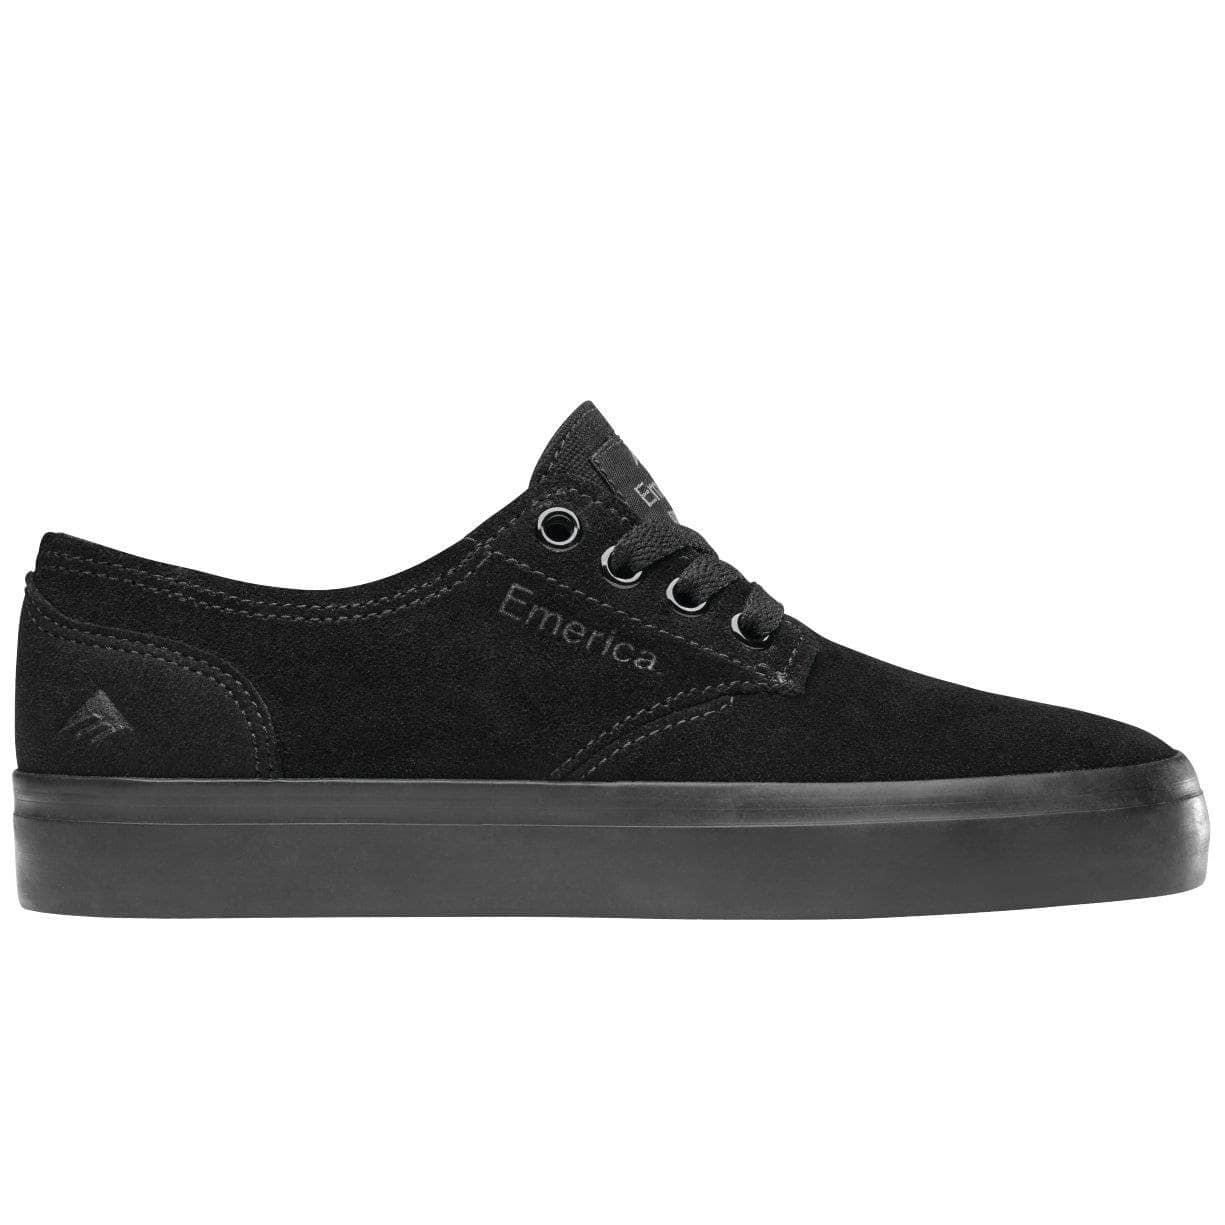 Emerica Kids The Romero Laced Youth Skate Shoes - Black/Black Gum Boys Skate Shoes by Emerica